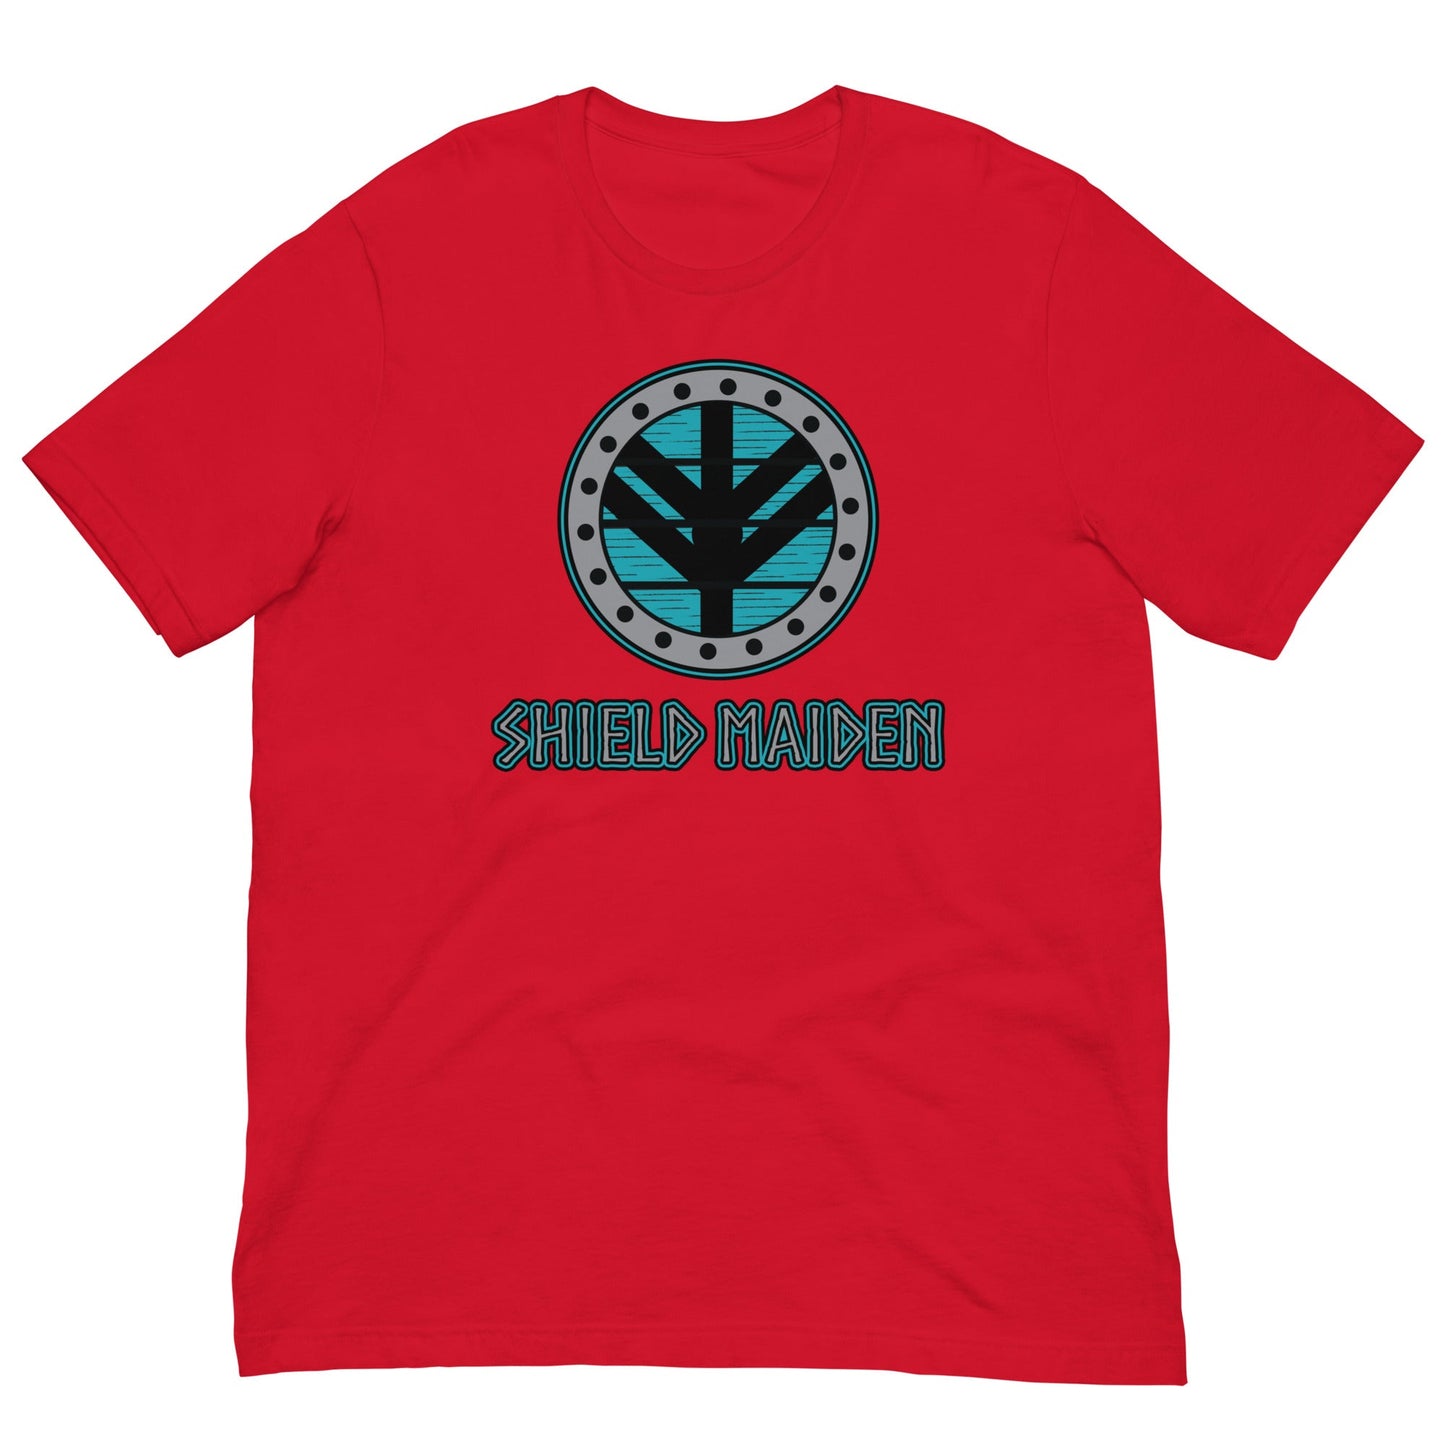 Shield maiden T-shirt Red / XS